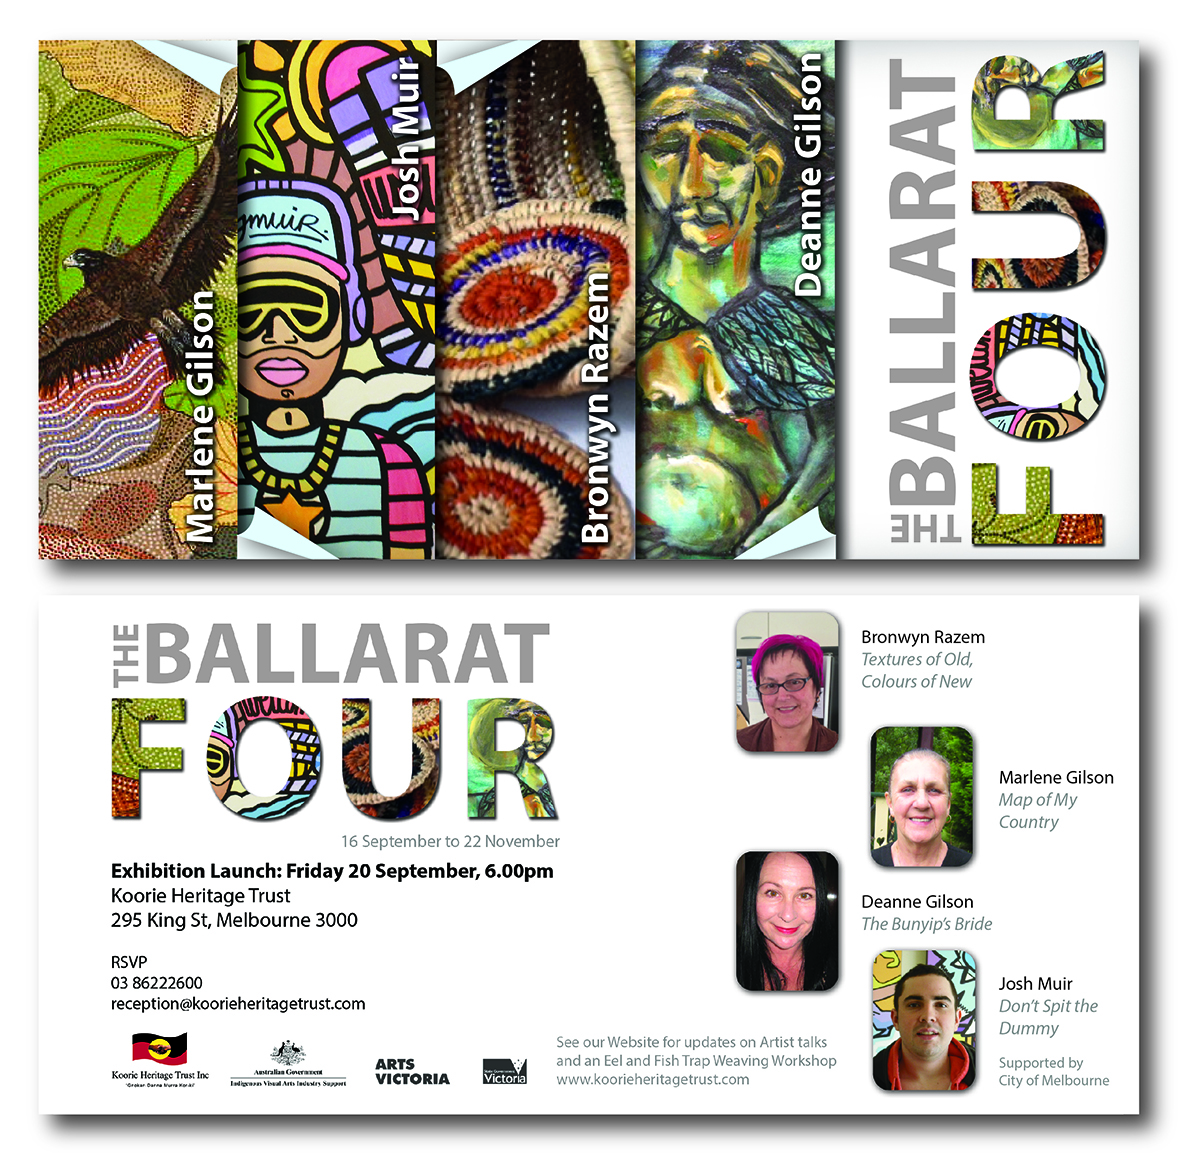 The Ballarat 4</br>Bronwyn Razem, Marlene Gilson, Deanne Gilson, Josh Muir